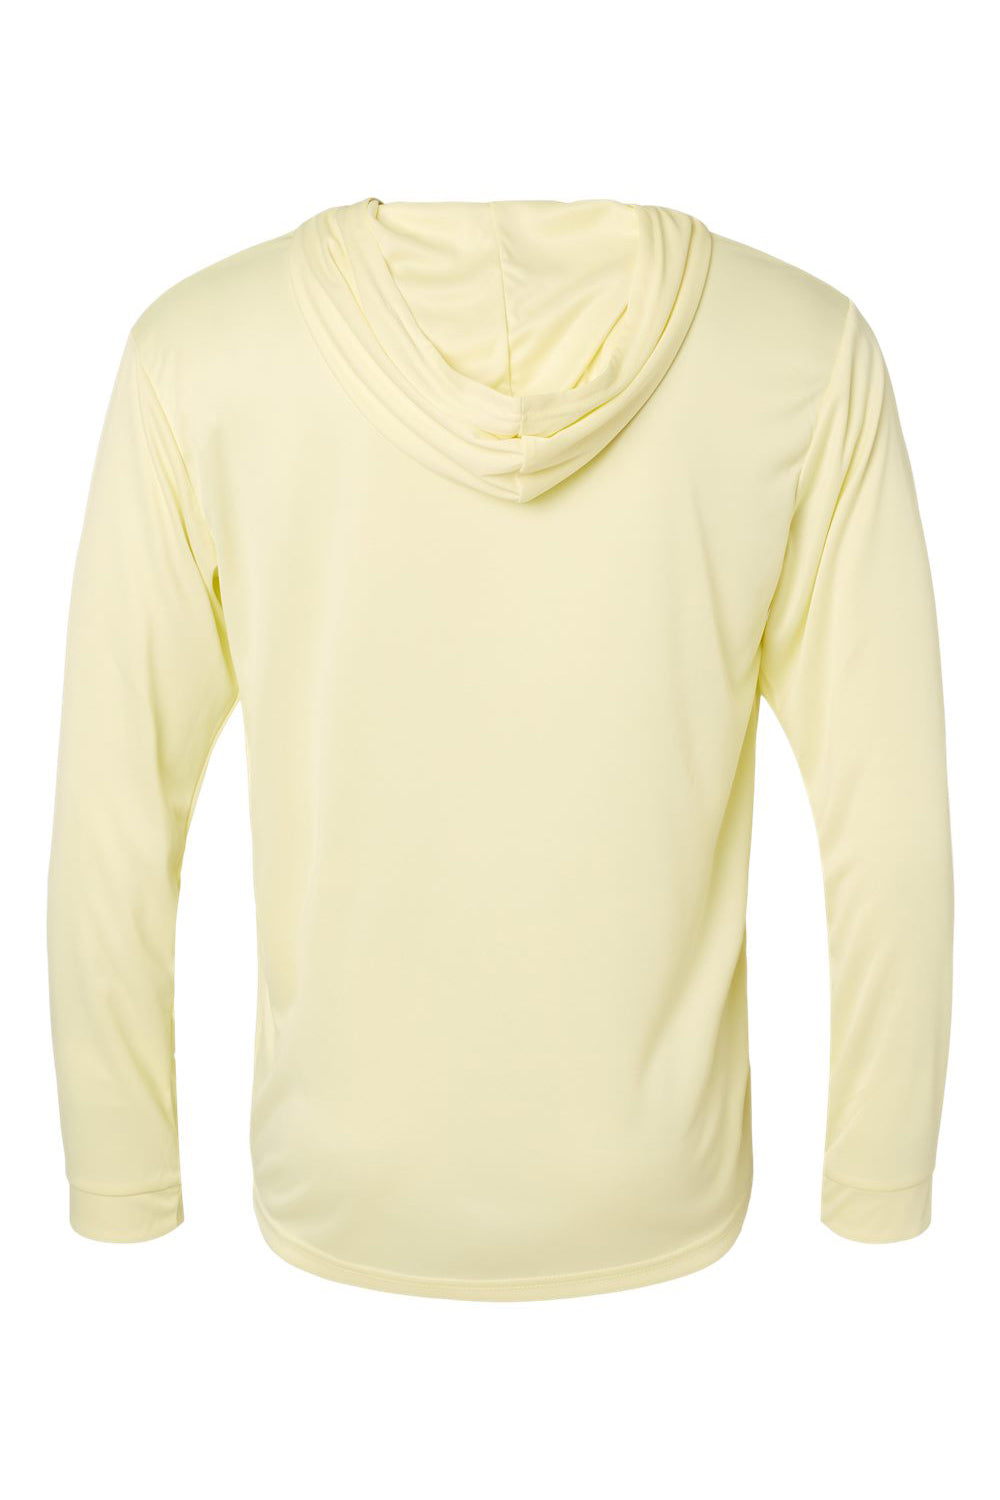 Paragon 220 Mens Bahama Performance Long Sleeve Hooded T-Shirt Hoodie Pale Yellow Flat Back